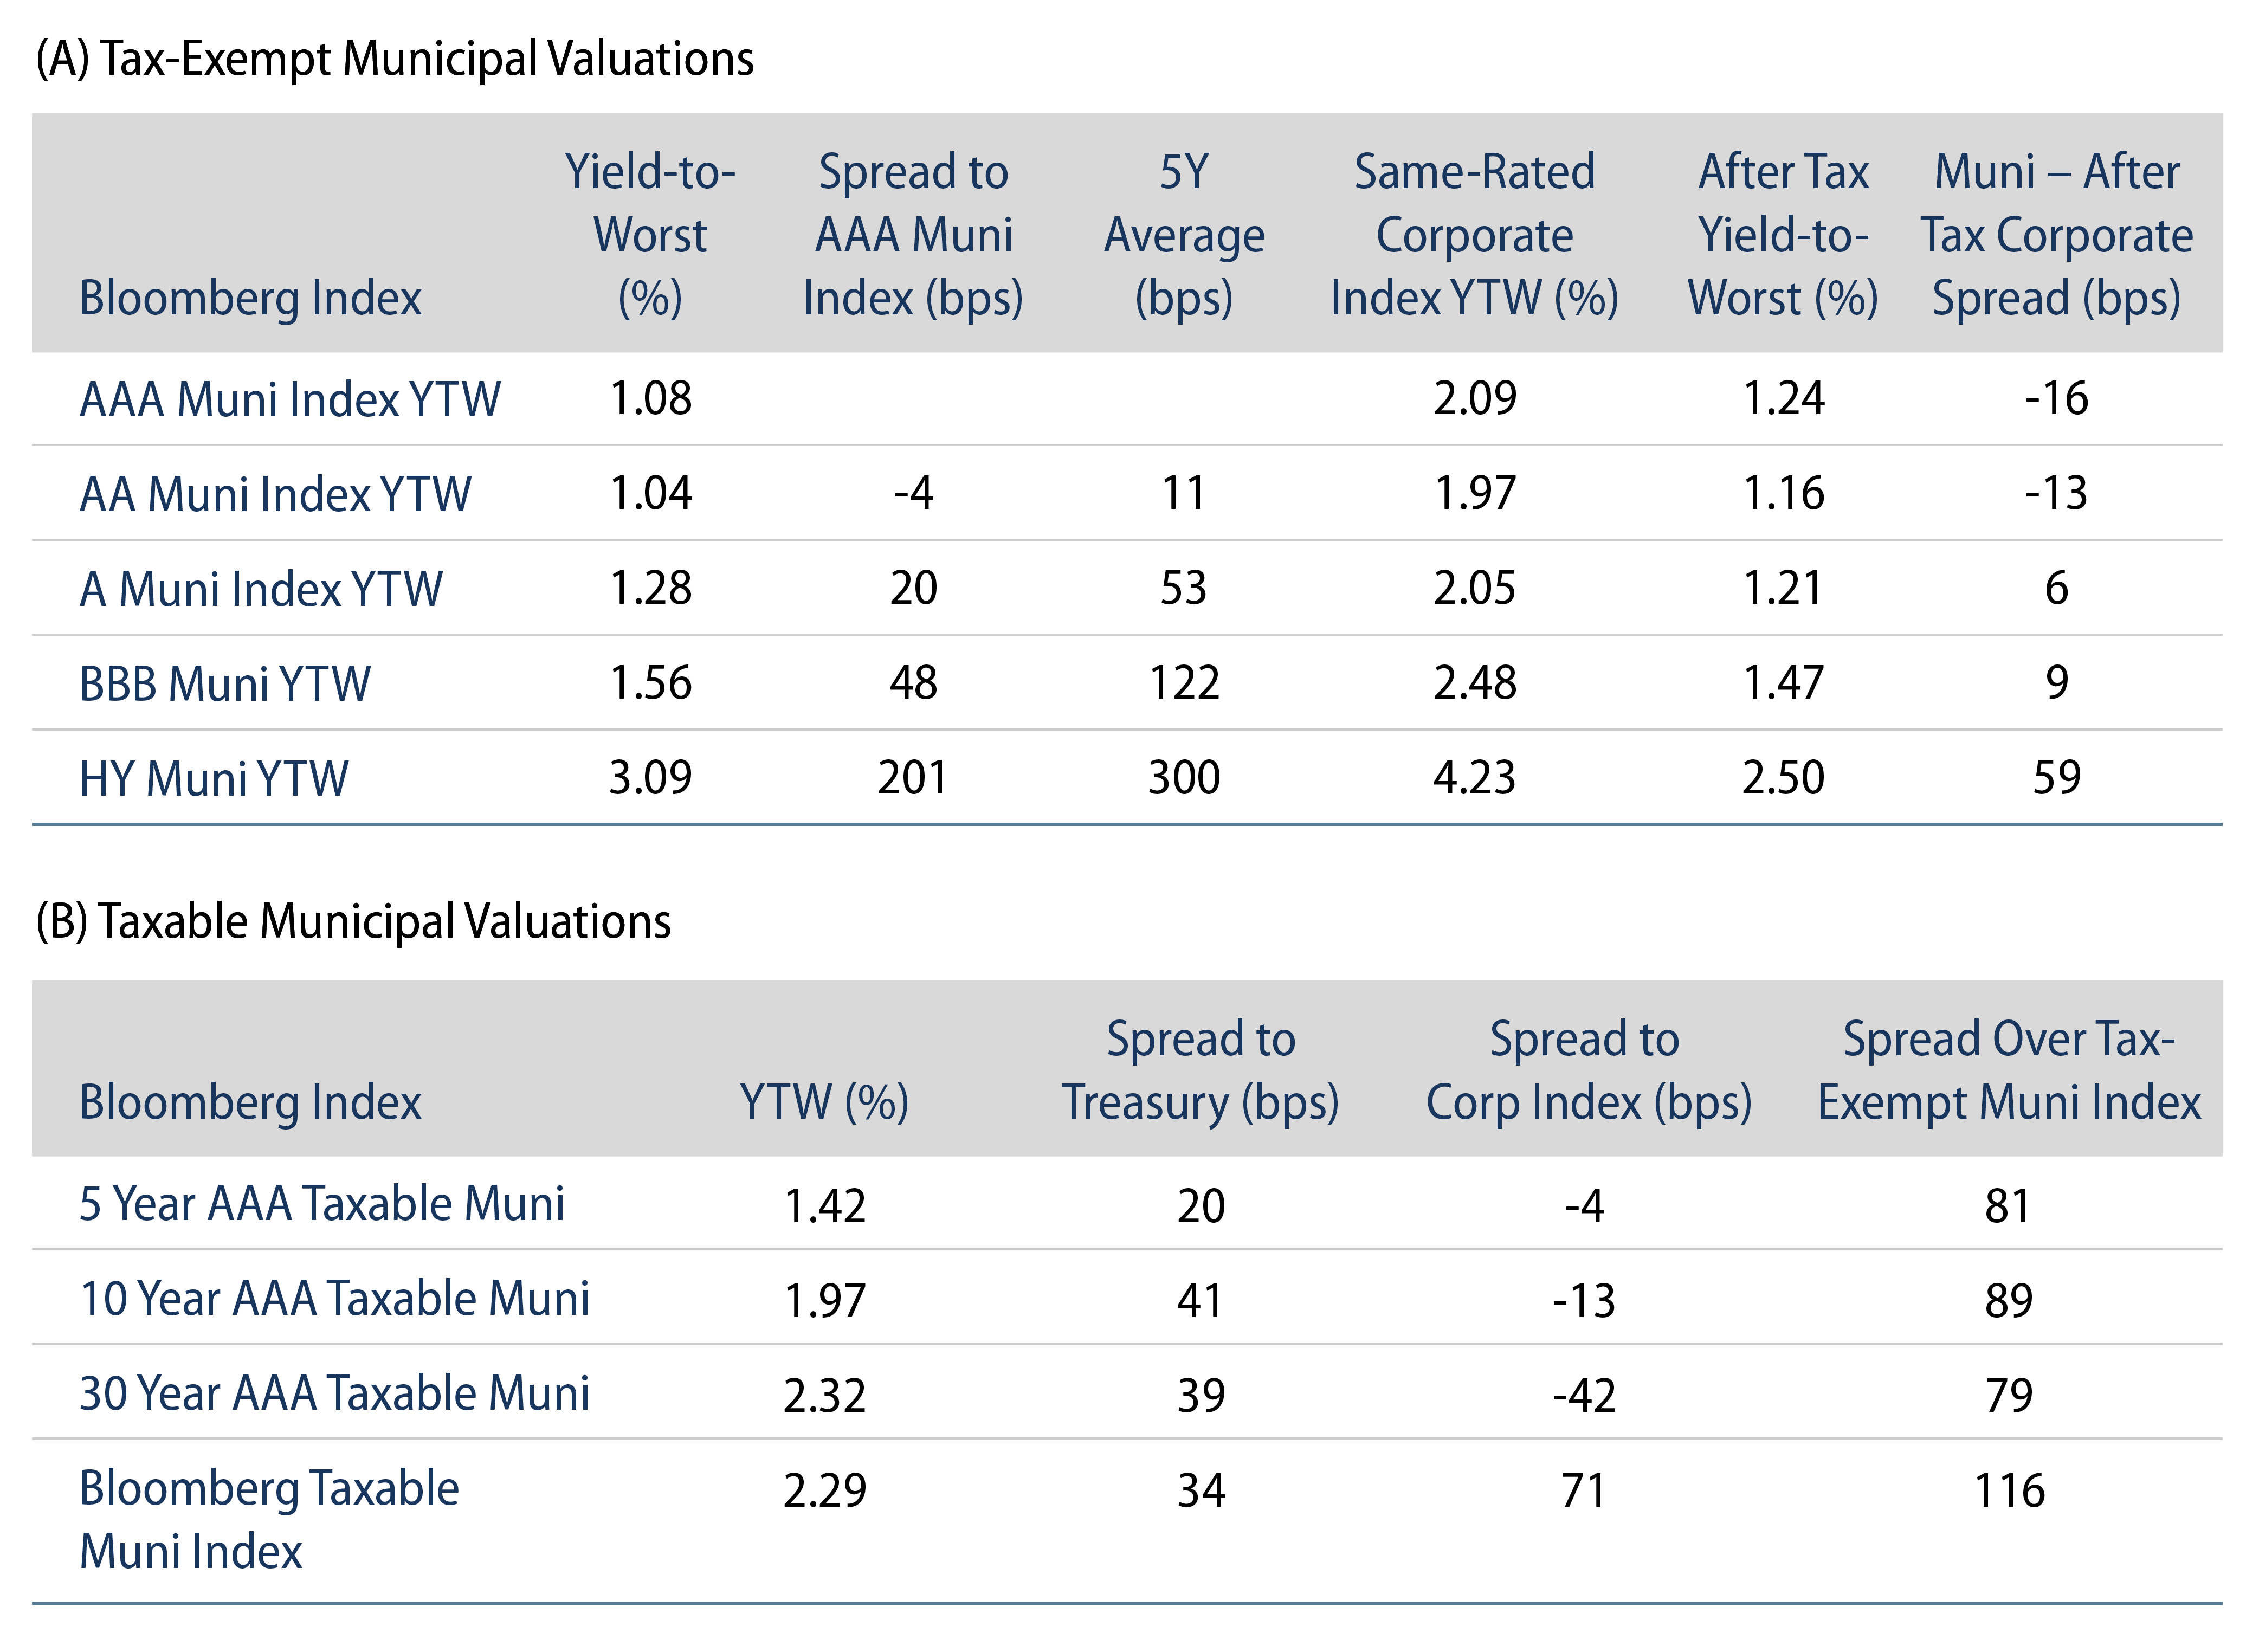 Exhibit 2: Tax-Exempt Muni Valuations